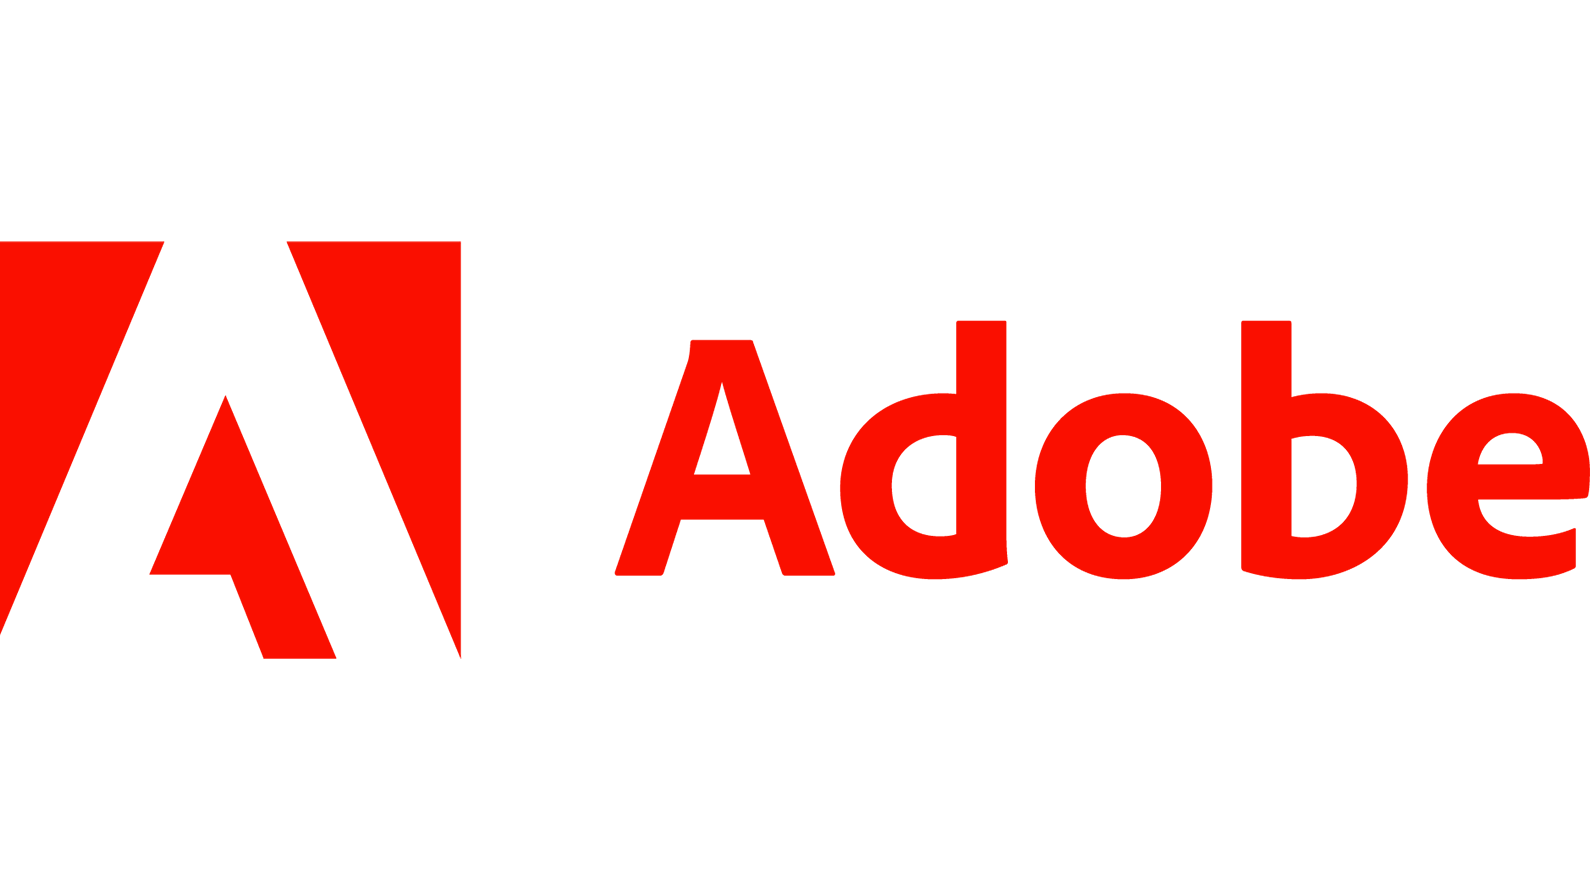 Adobe_Corporate_Logo_16_9-1